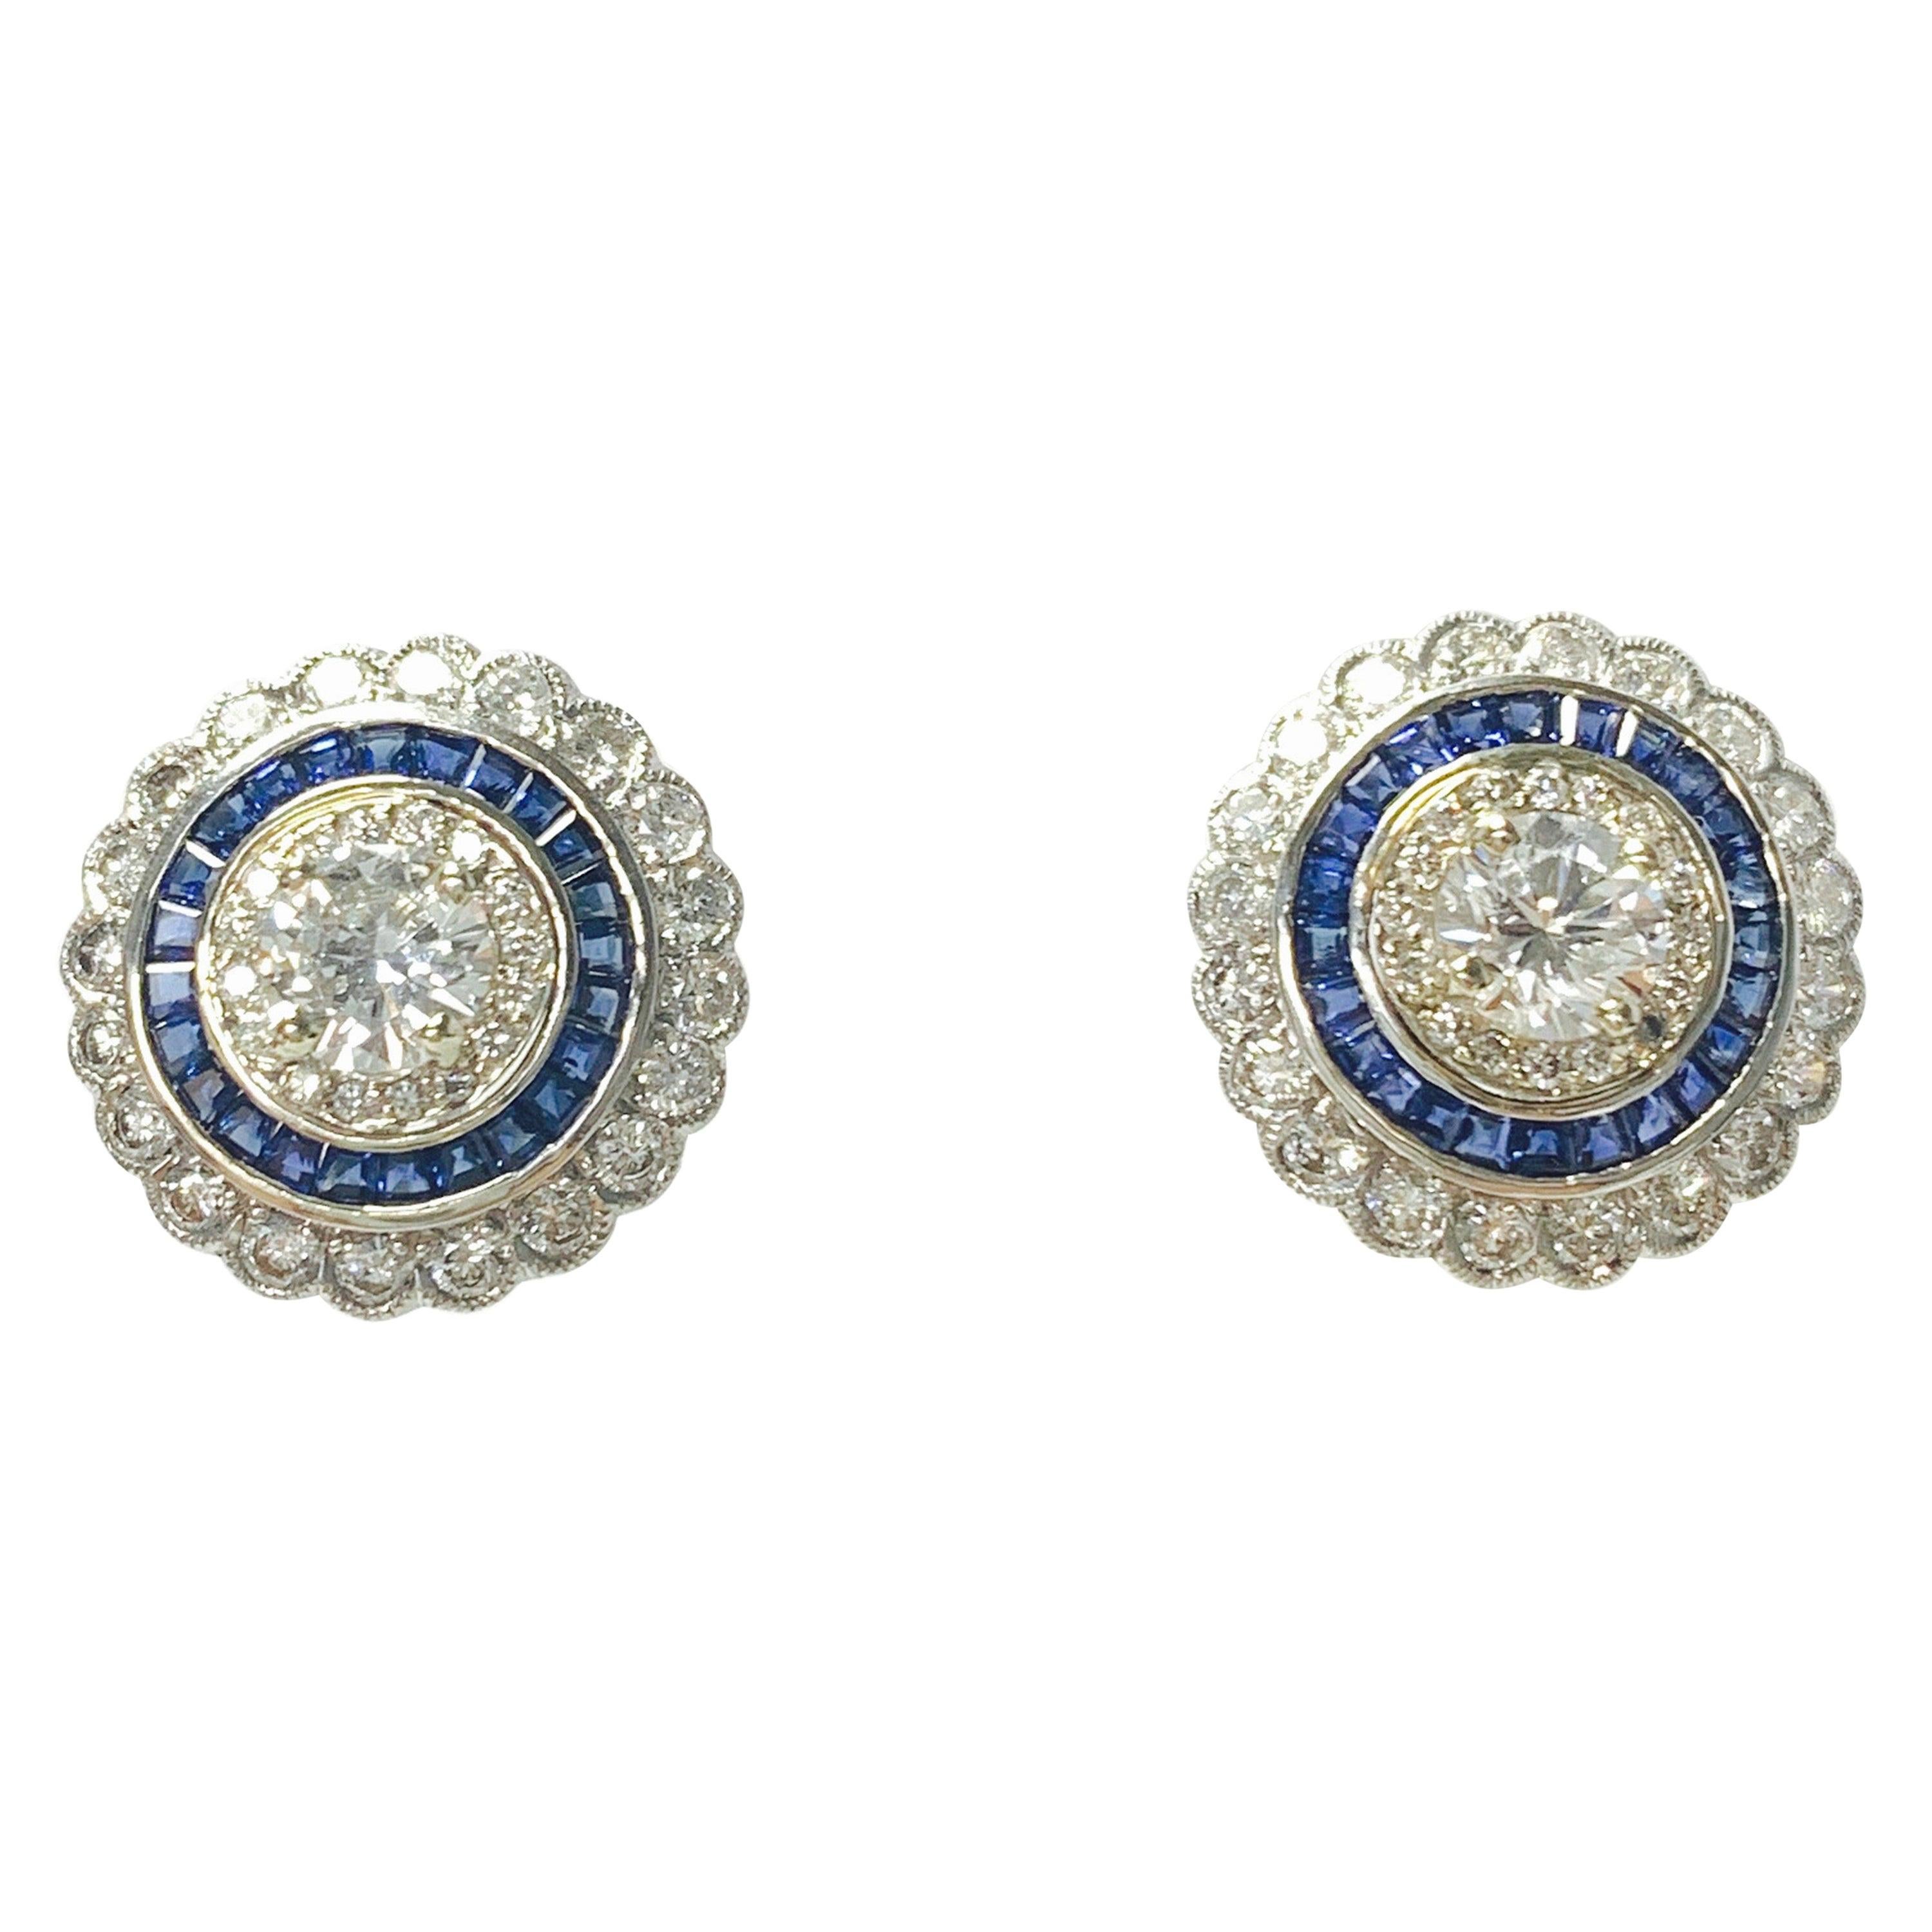 White Old European Cut Diamond and Blue Sapphire Stud Earrings in 18 Karat Gold